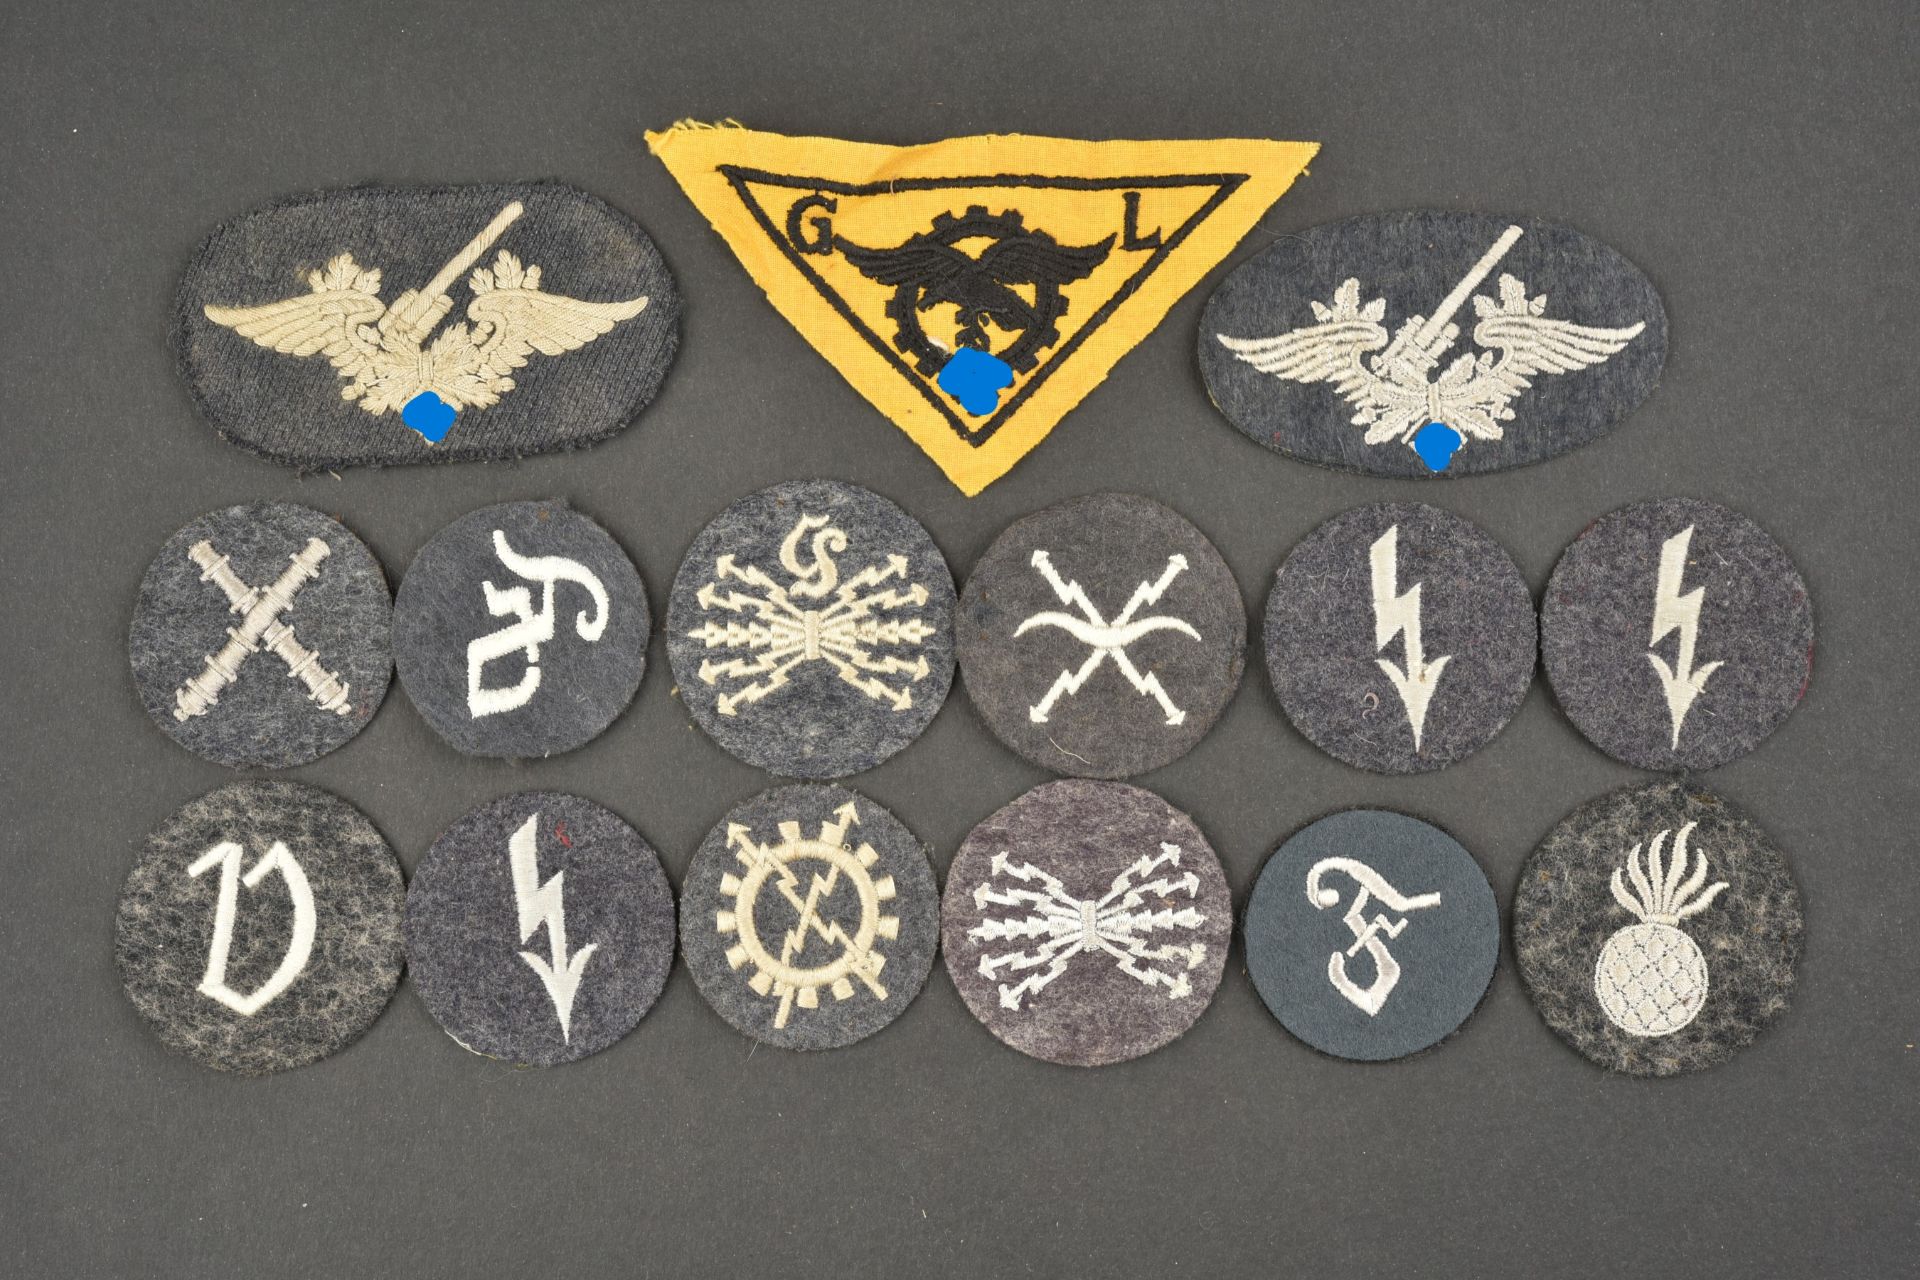 Insignes de specialite de la Luftwaffe. Luftwaffe specialty badges.